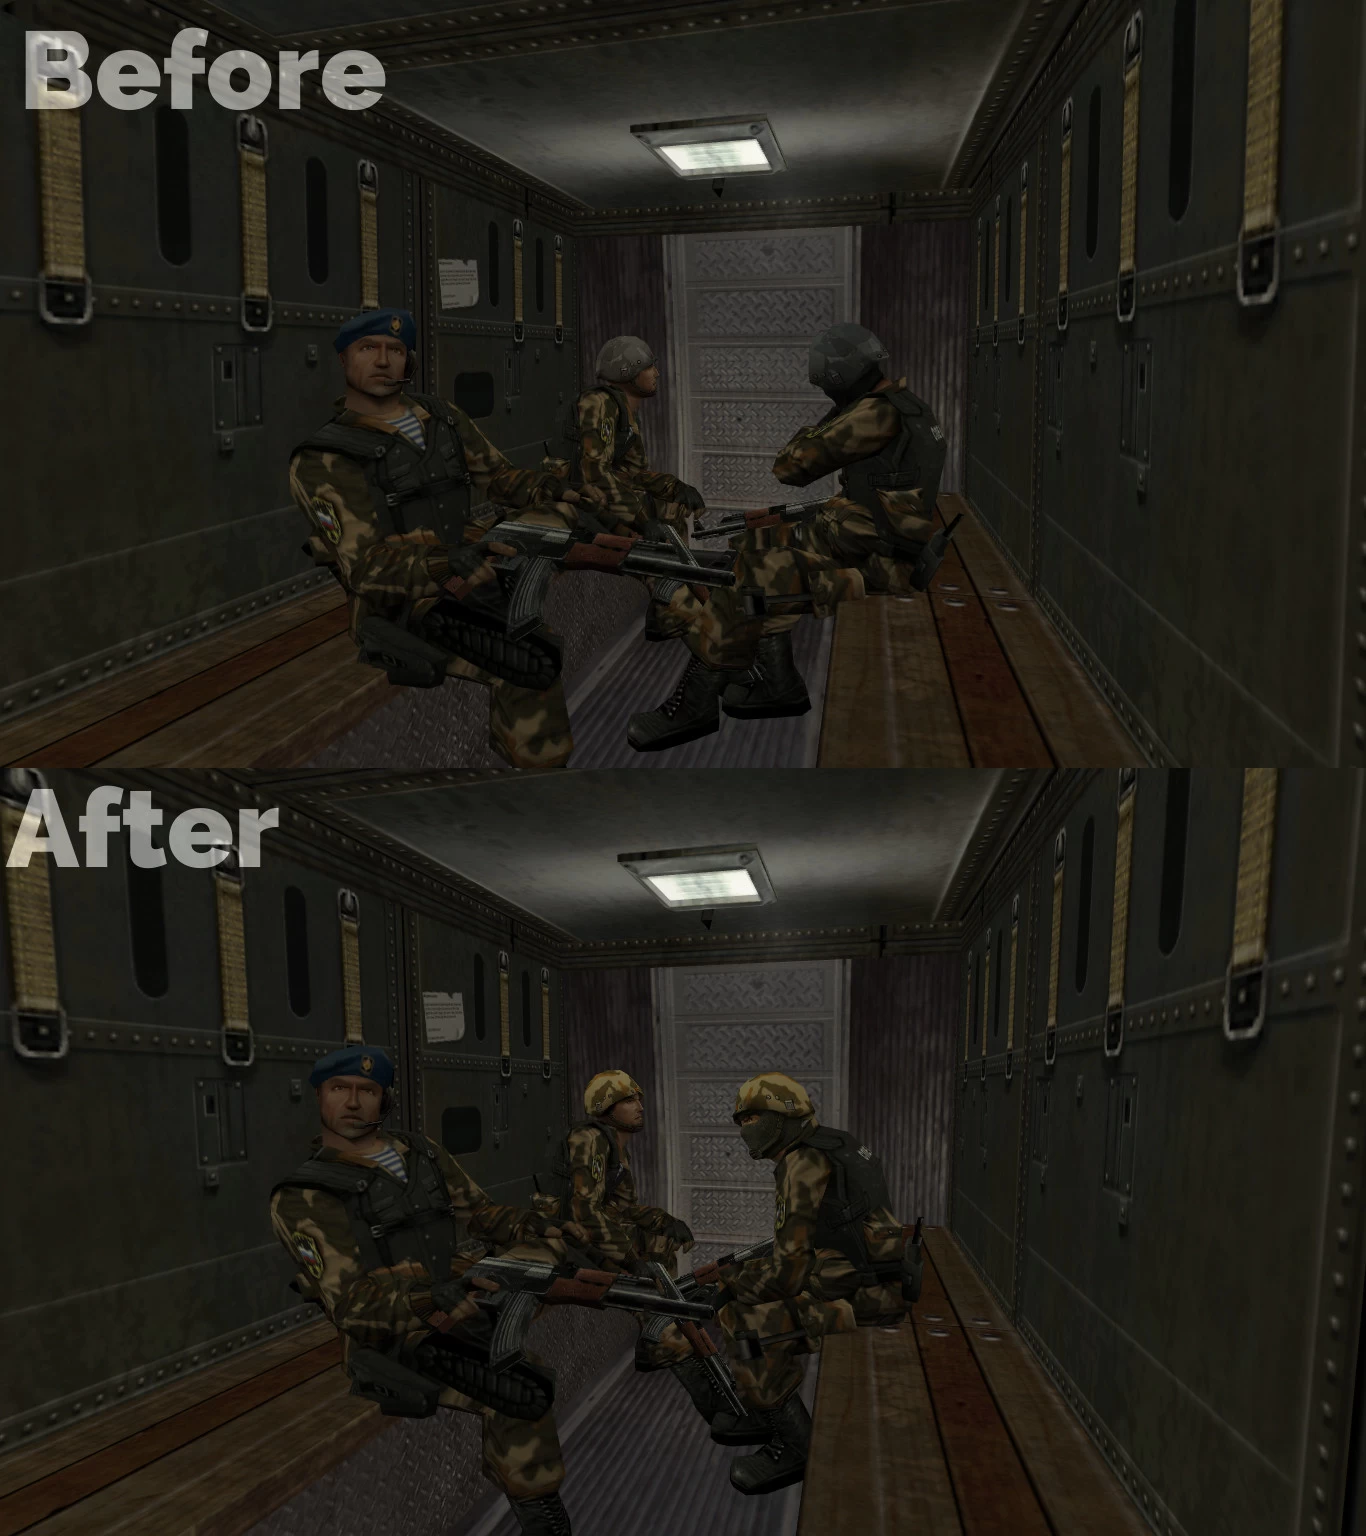 FREE PC GAMES TO DOWNLOAD: Counter Strike Condition Zero Deleted Scenes